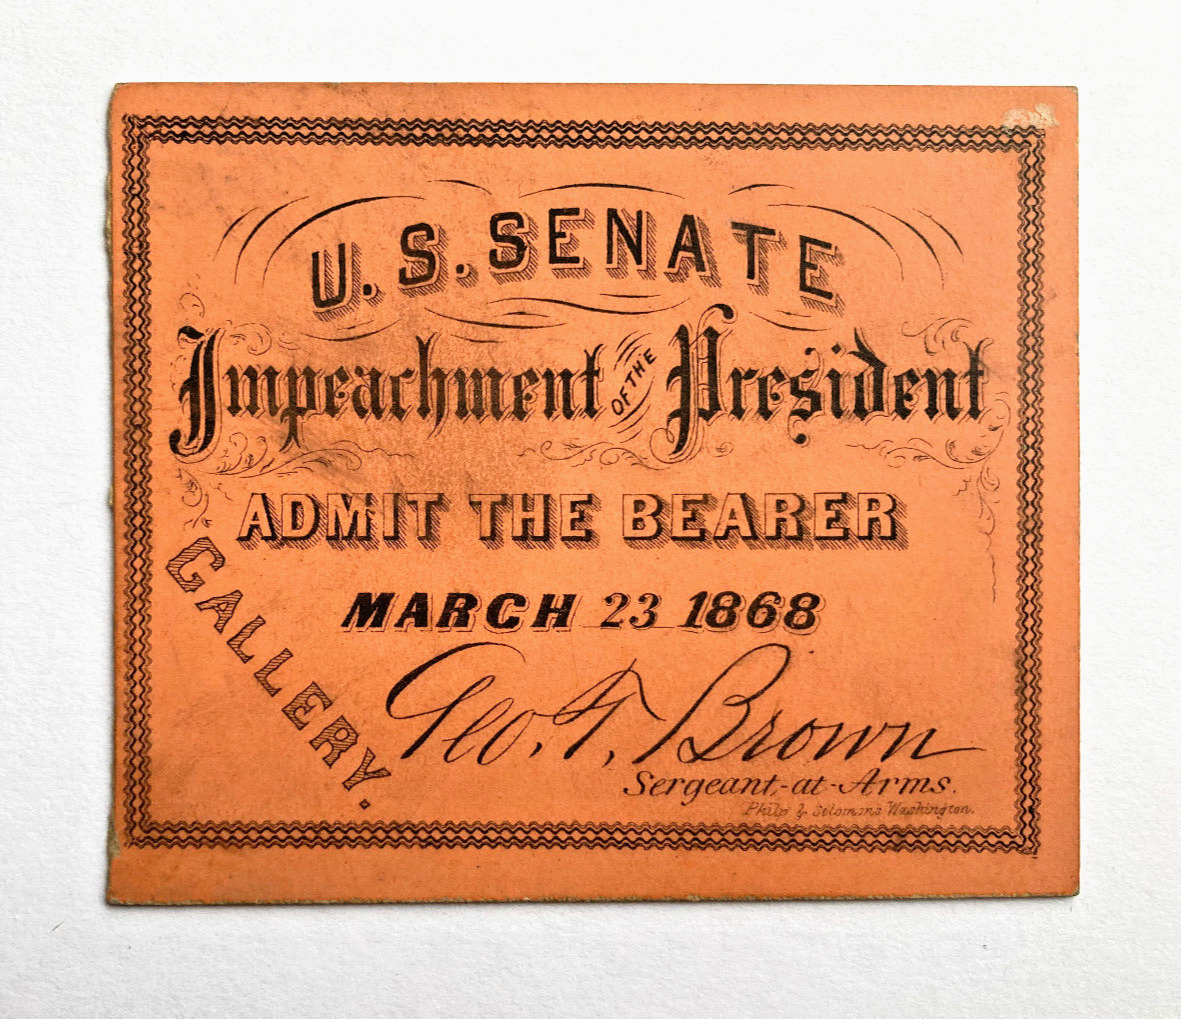 Antique 1868 Ticket for President Andrew Johnson's Impeachment by U.S. Senate